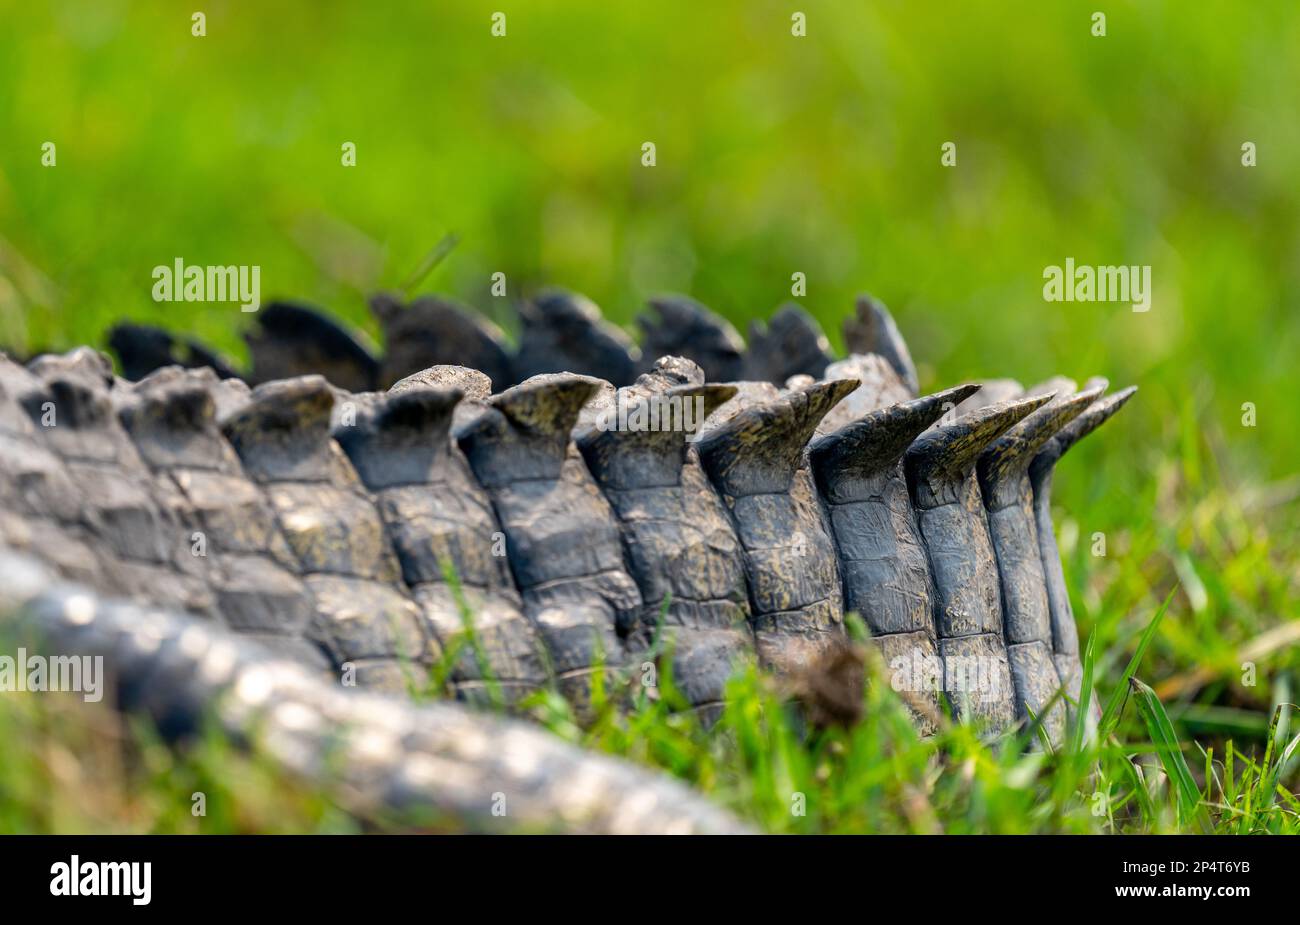 Crocodile Tail closeup in green gras in botswana chobe river Stock Photo